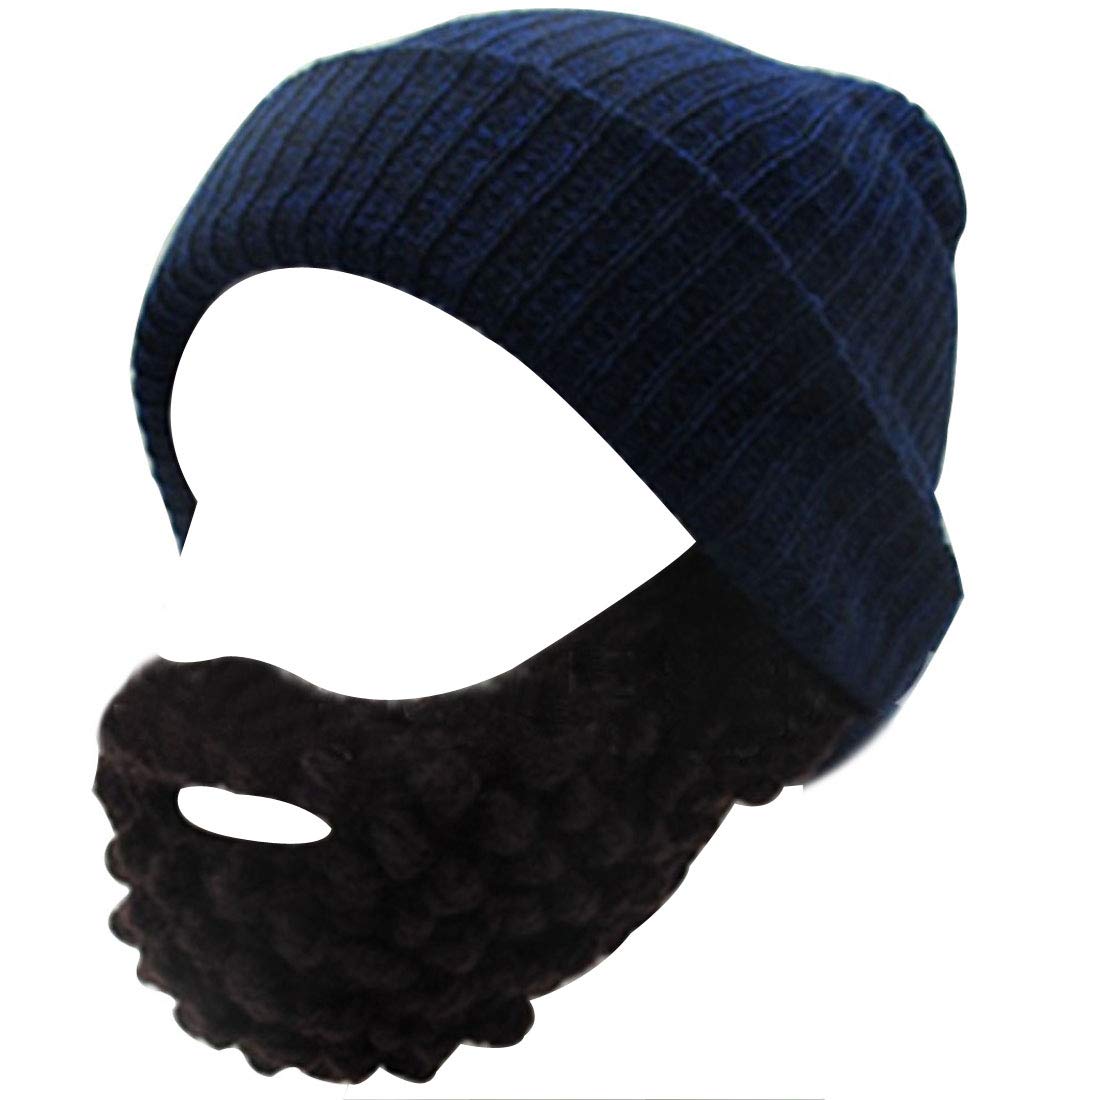 Crocheted Beard Hat - Funny Gift